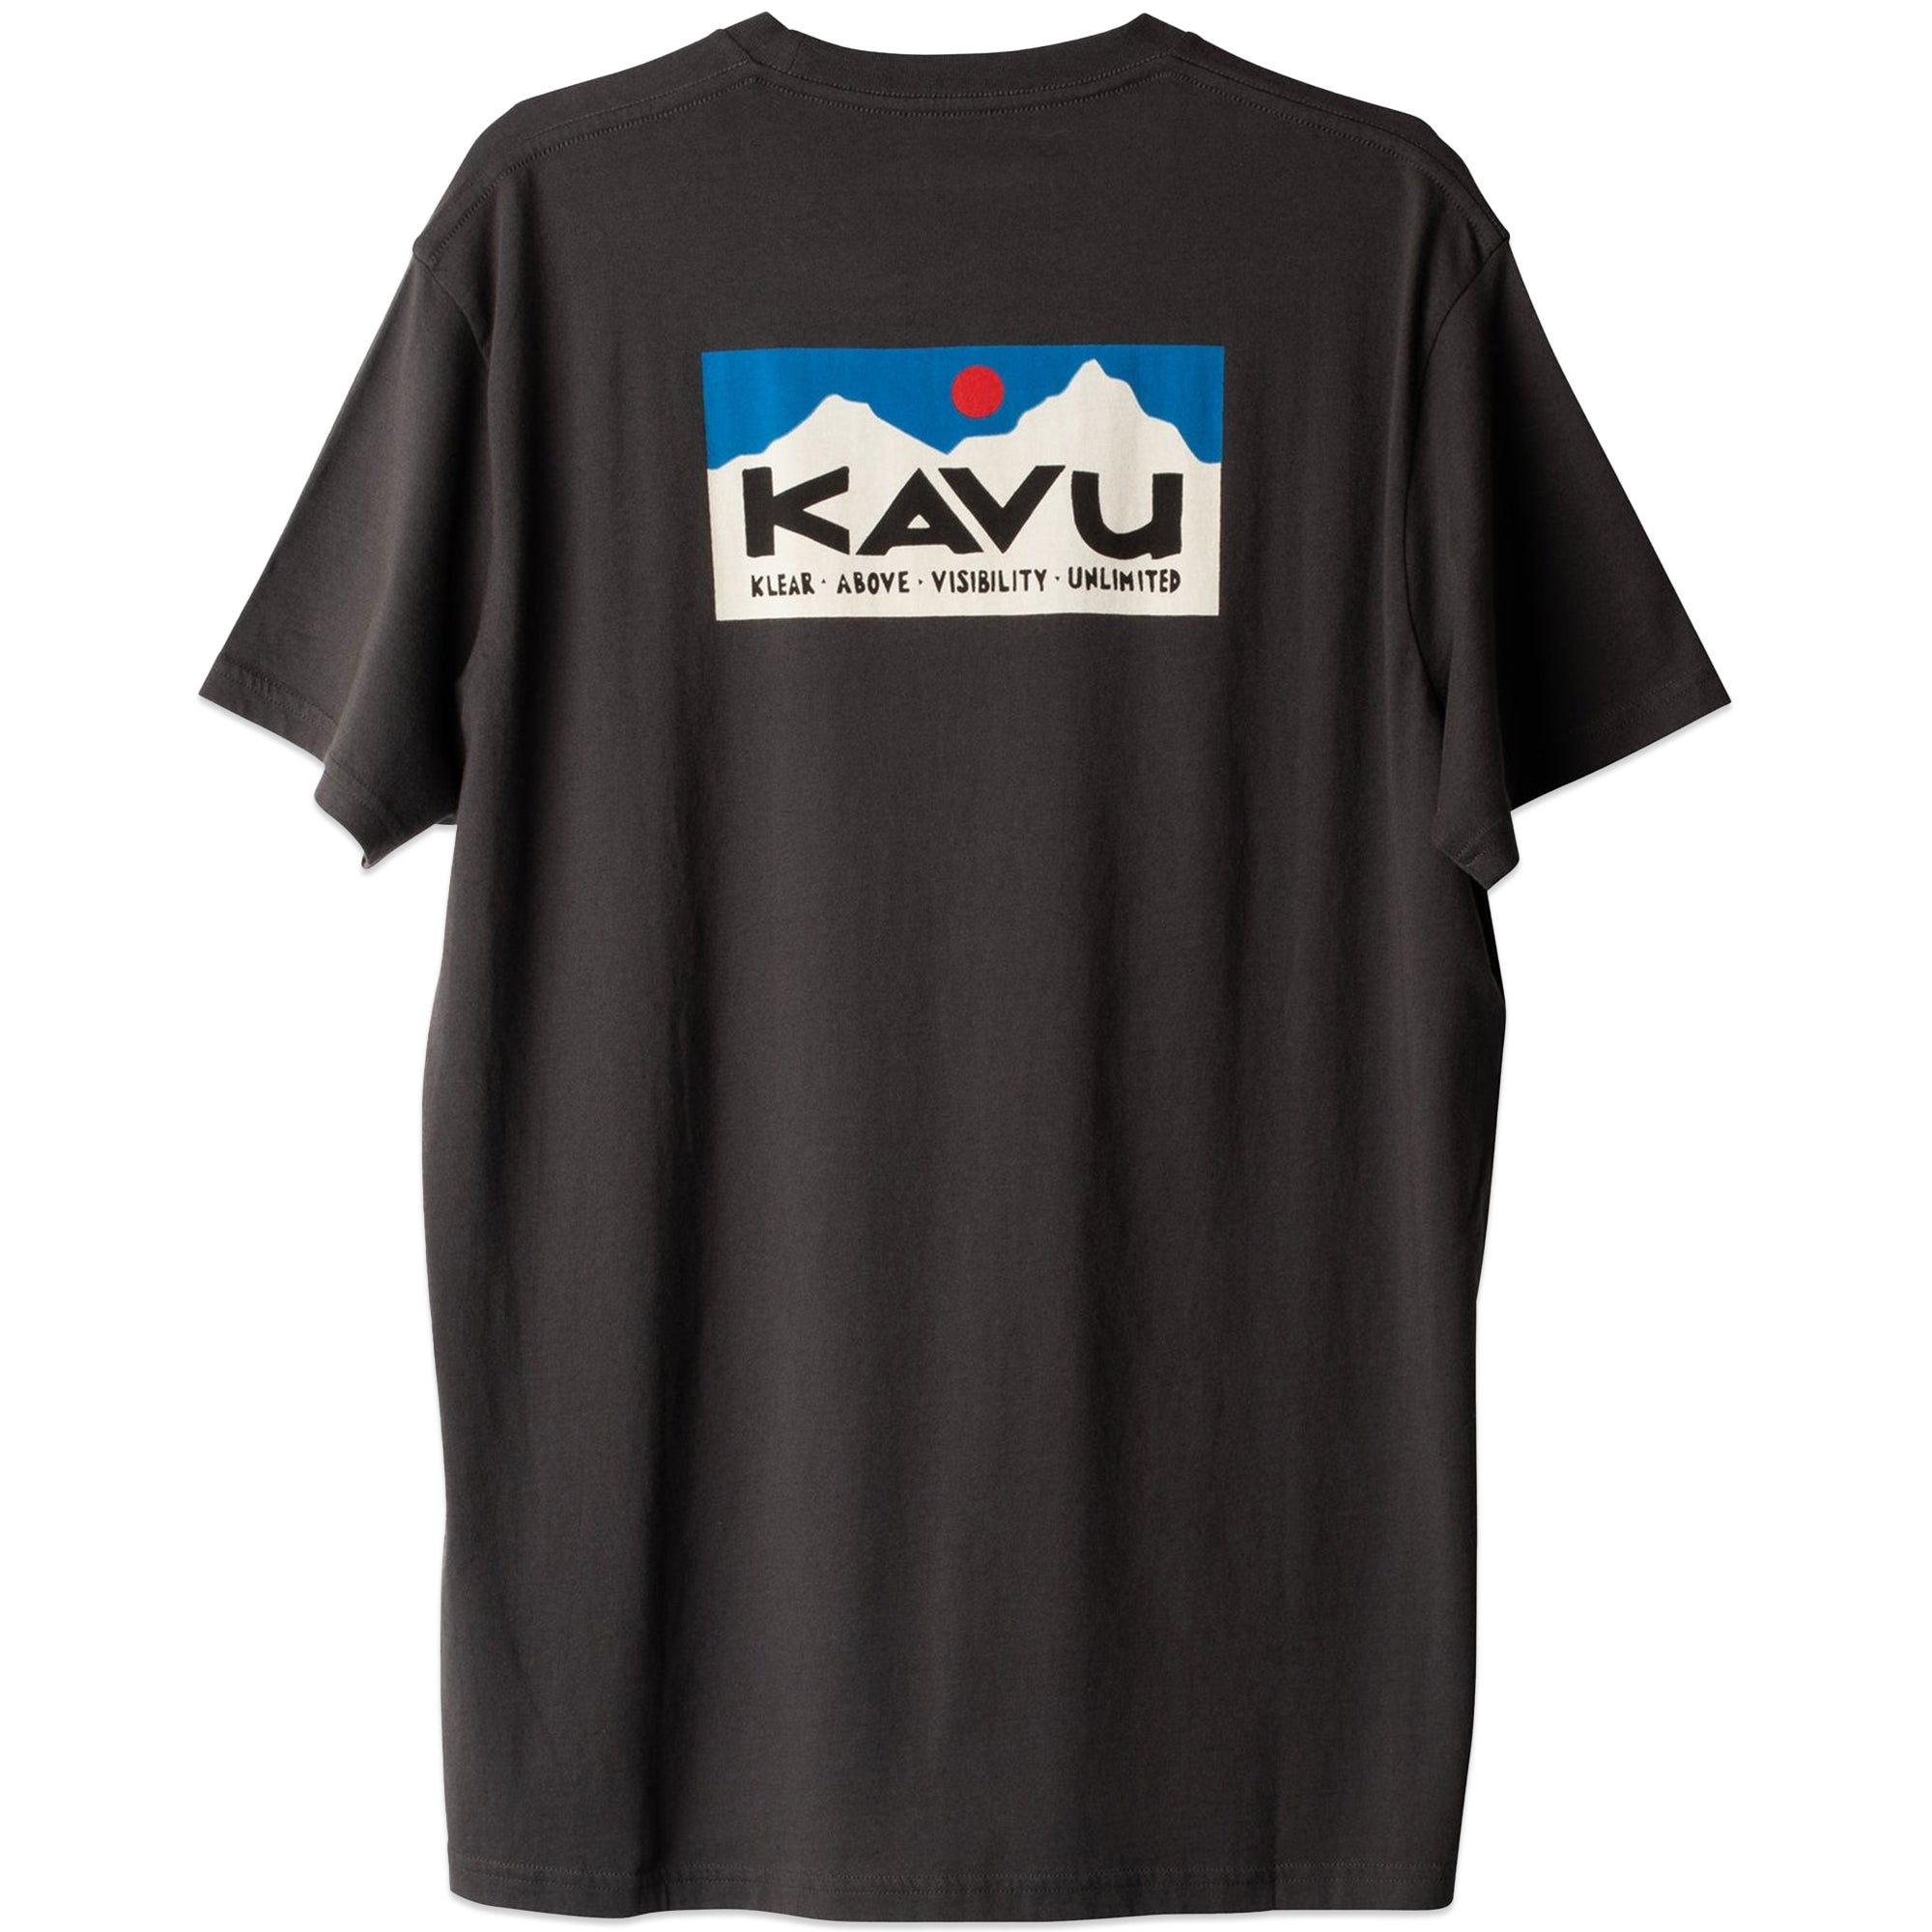 KAVU Klear Above Etch Art T-Shirt - Black Licorice